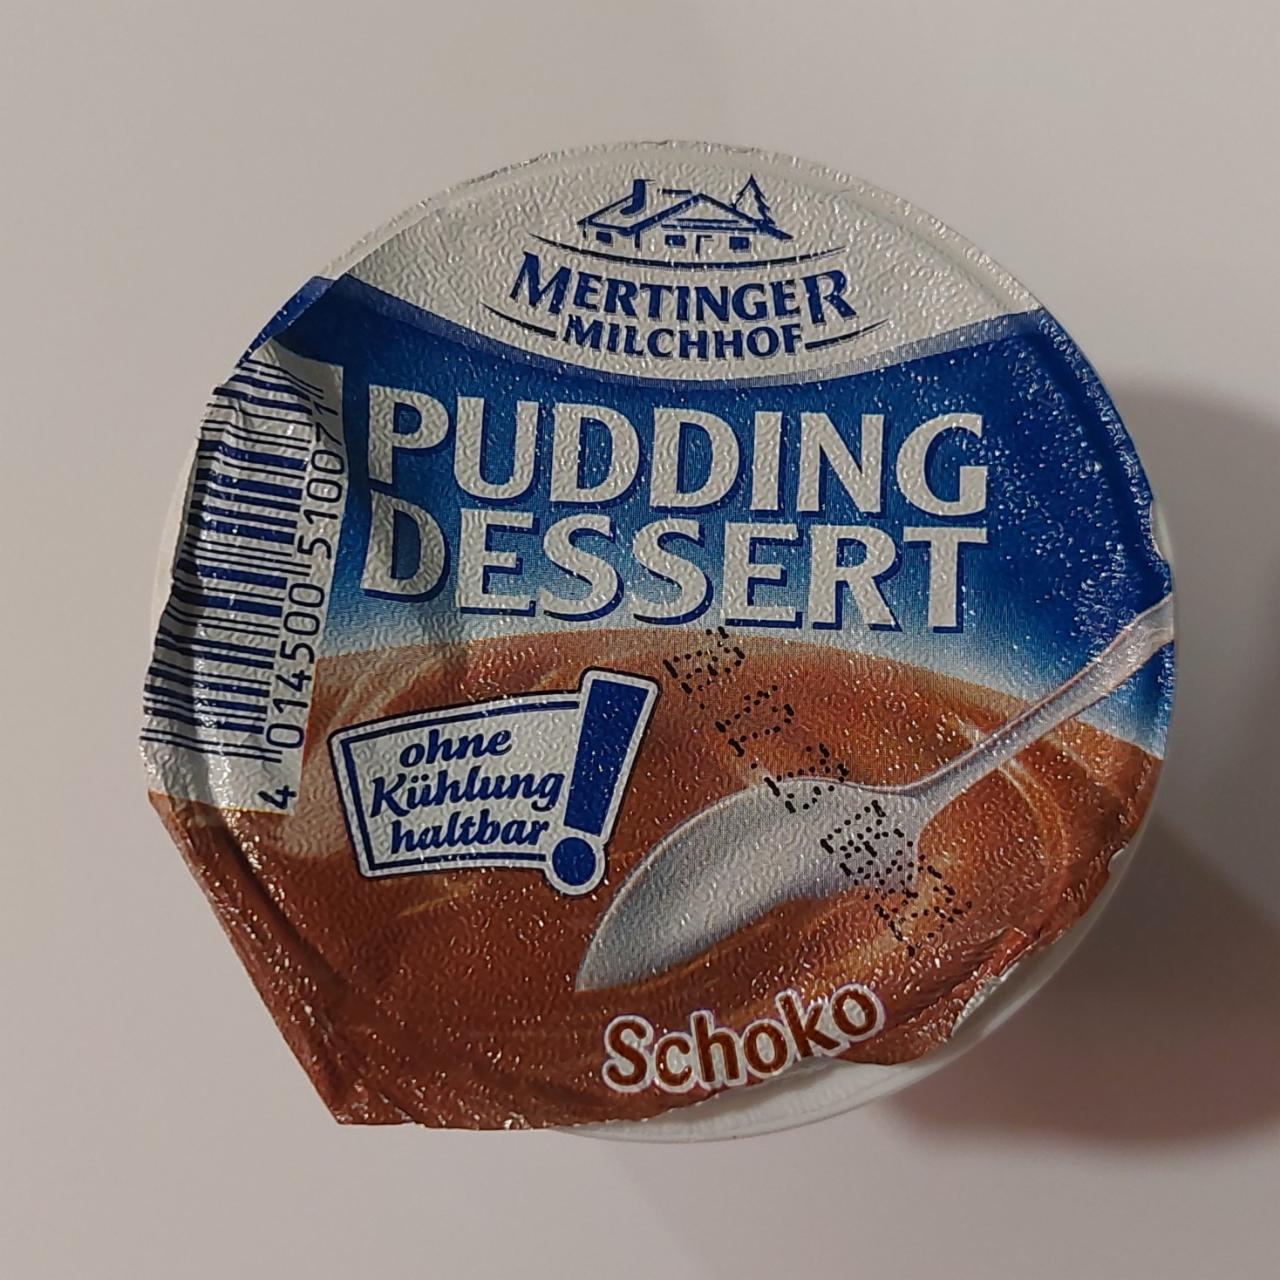 Fotografie - Pudding dessert Schoko Mertinger Milchhof